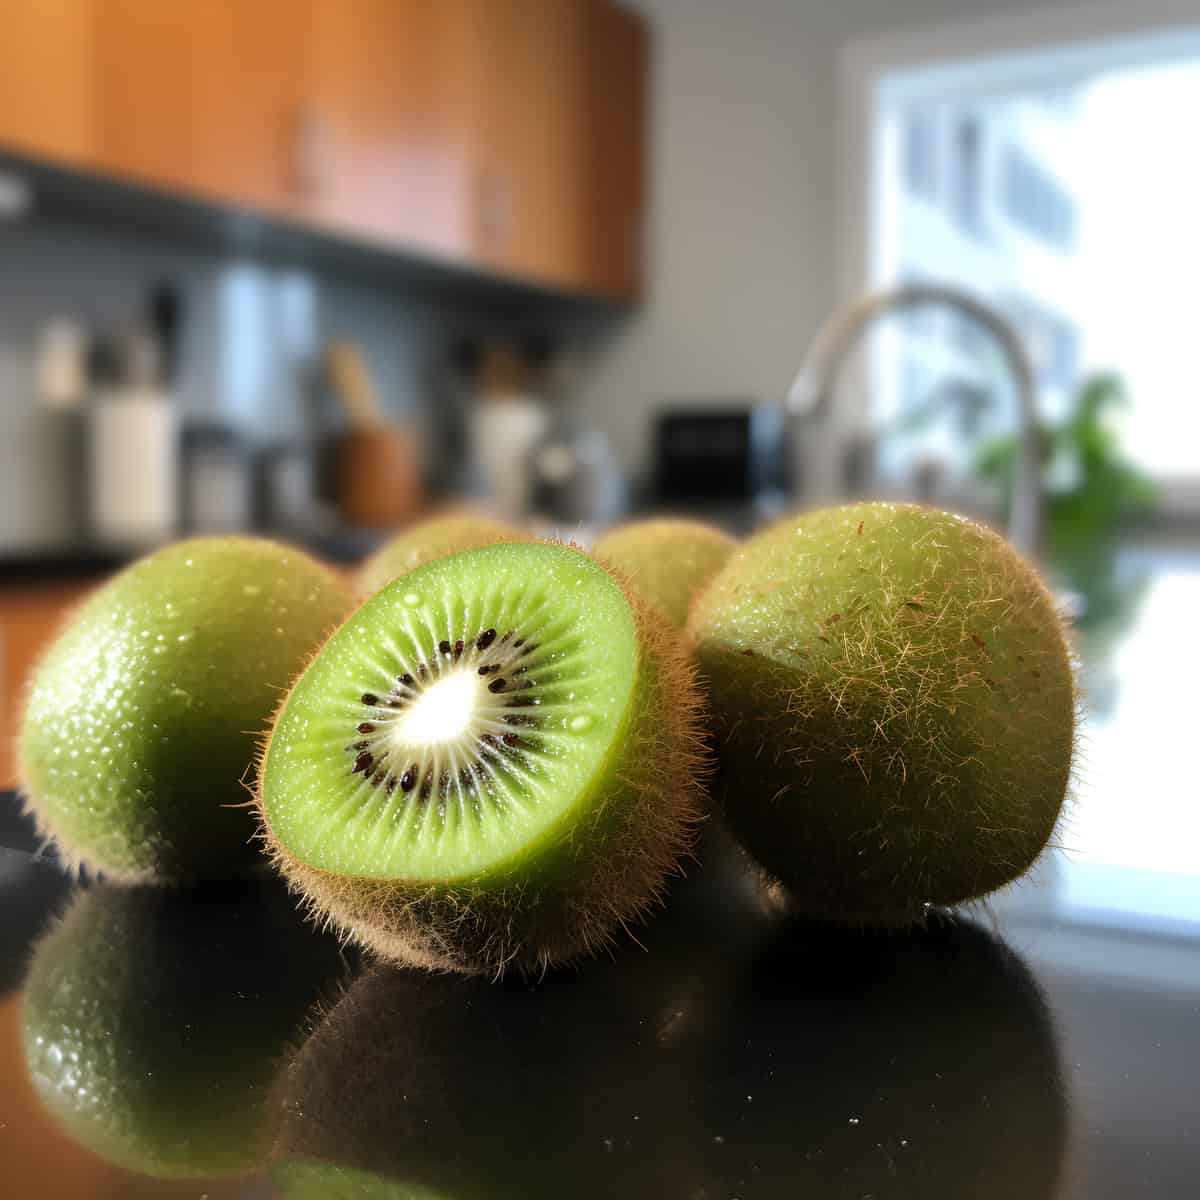 Golden Kiwifruit on a kitchen counter